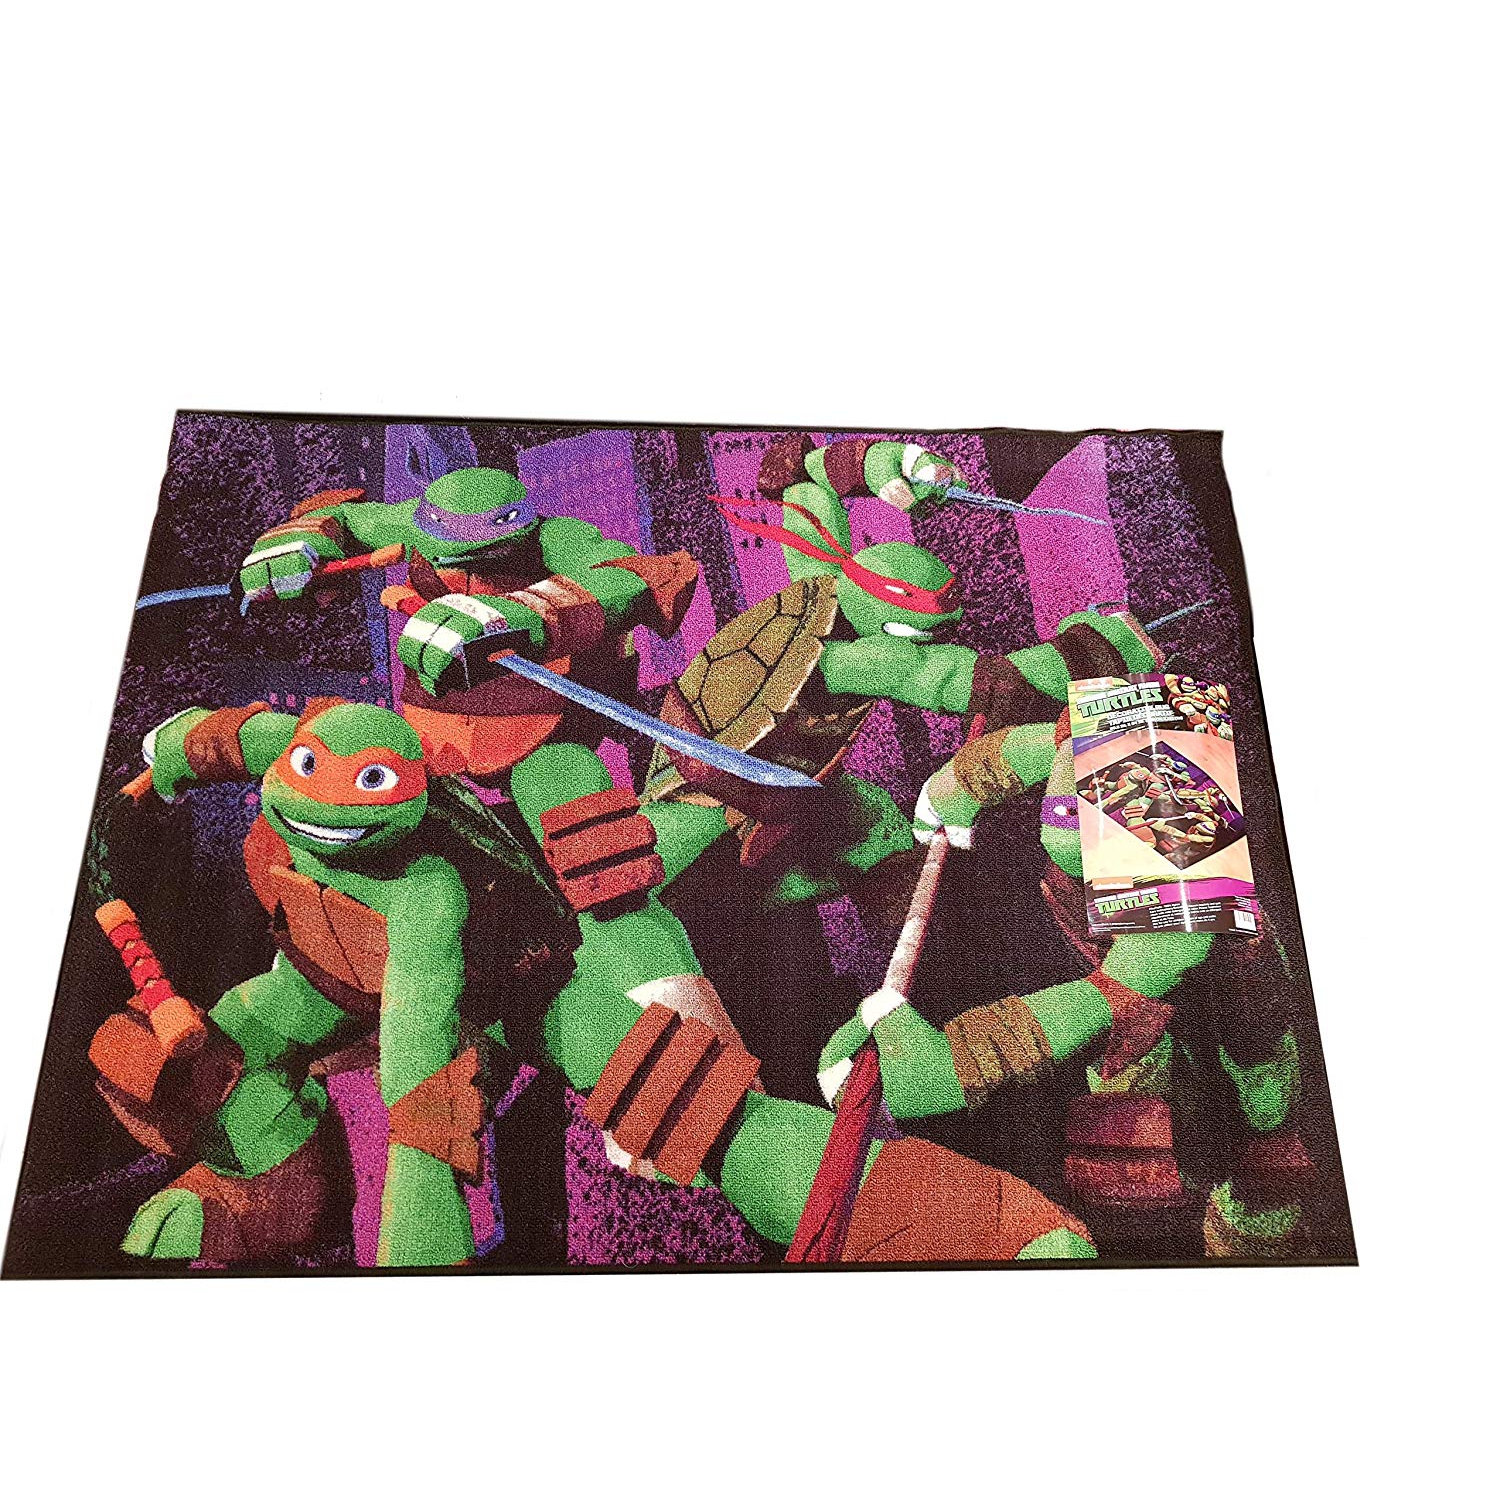 Nickelodeon Teenage Mutant Ninja Turtles Kids Yoga Mat Play Pad 